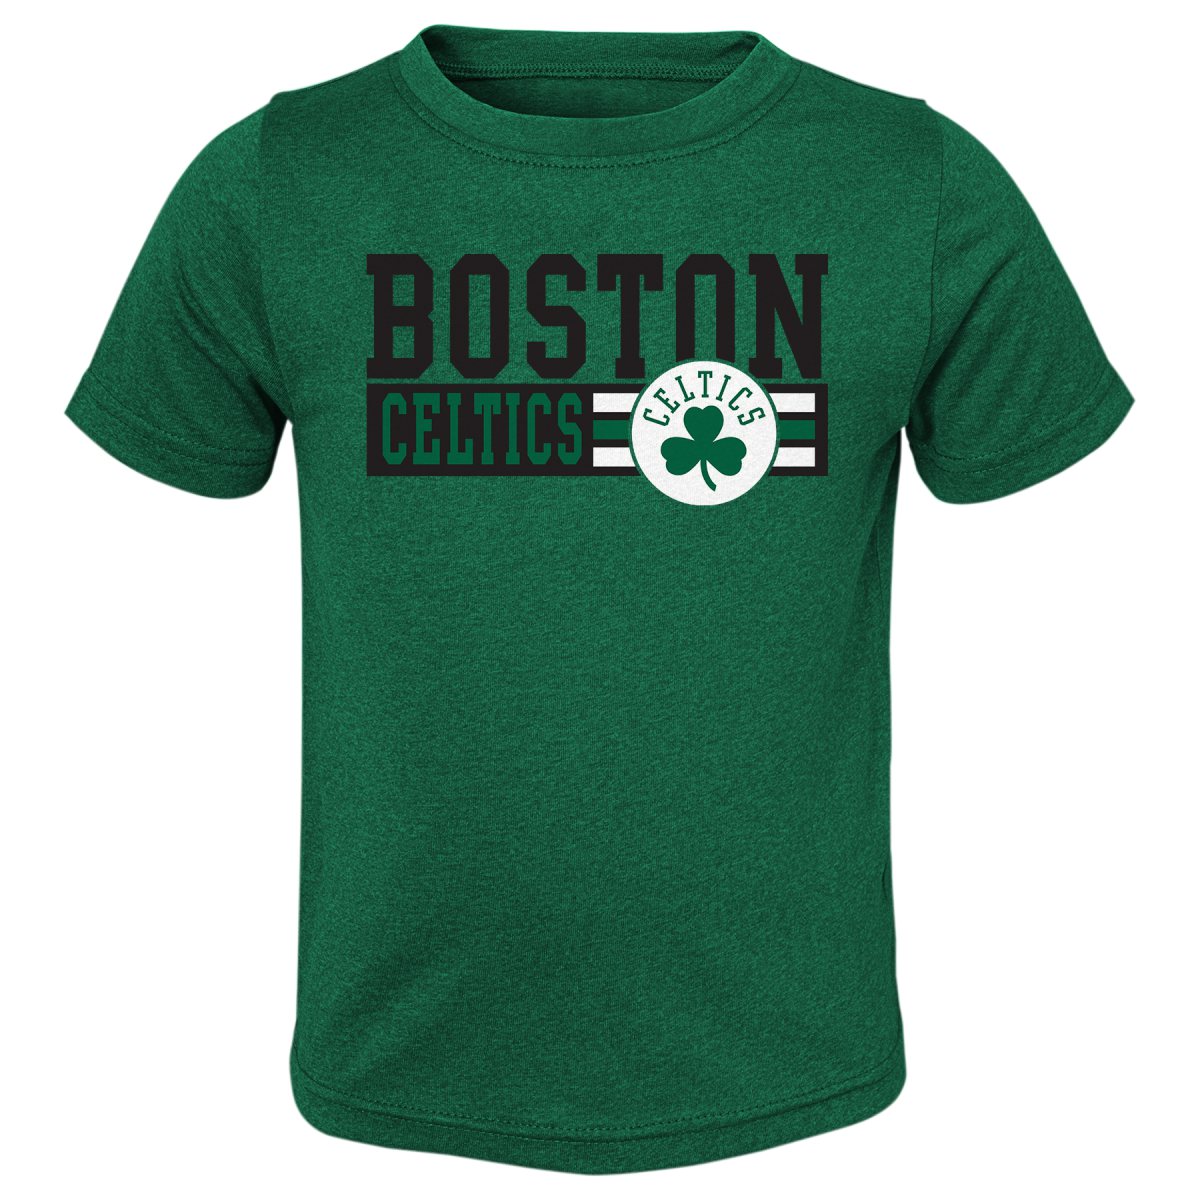 Boston Celtics Boys 4-18 SS Synth Top 9K2BXBDGV XXL18 - image 1 of 1